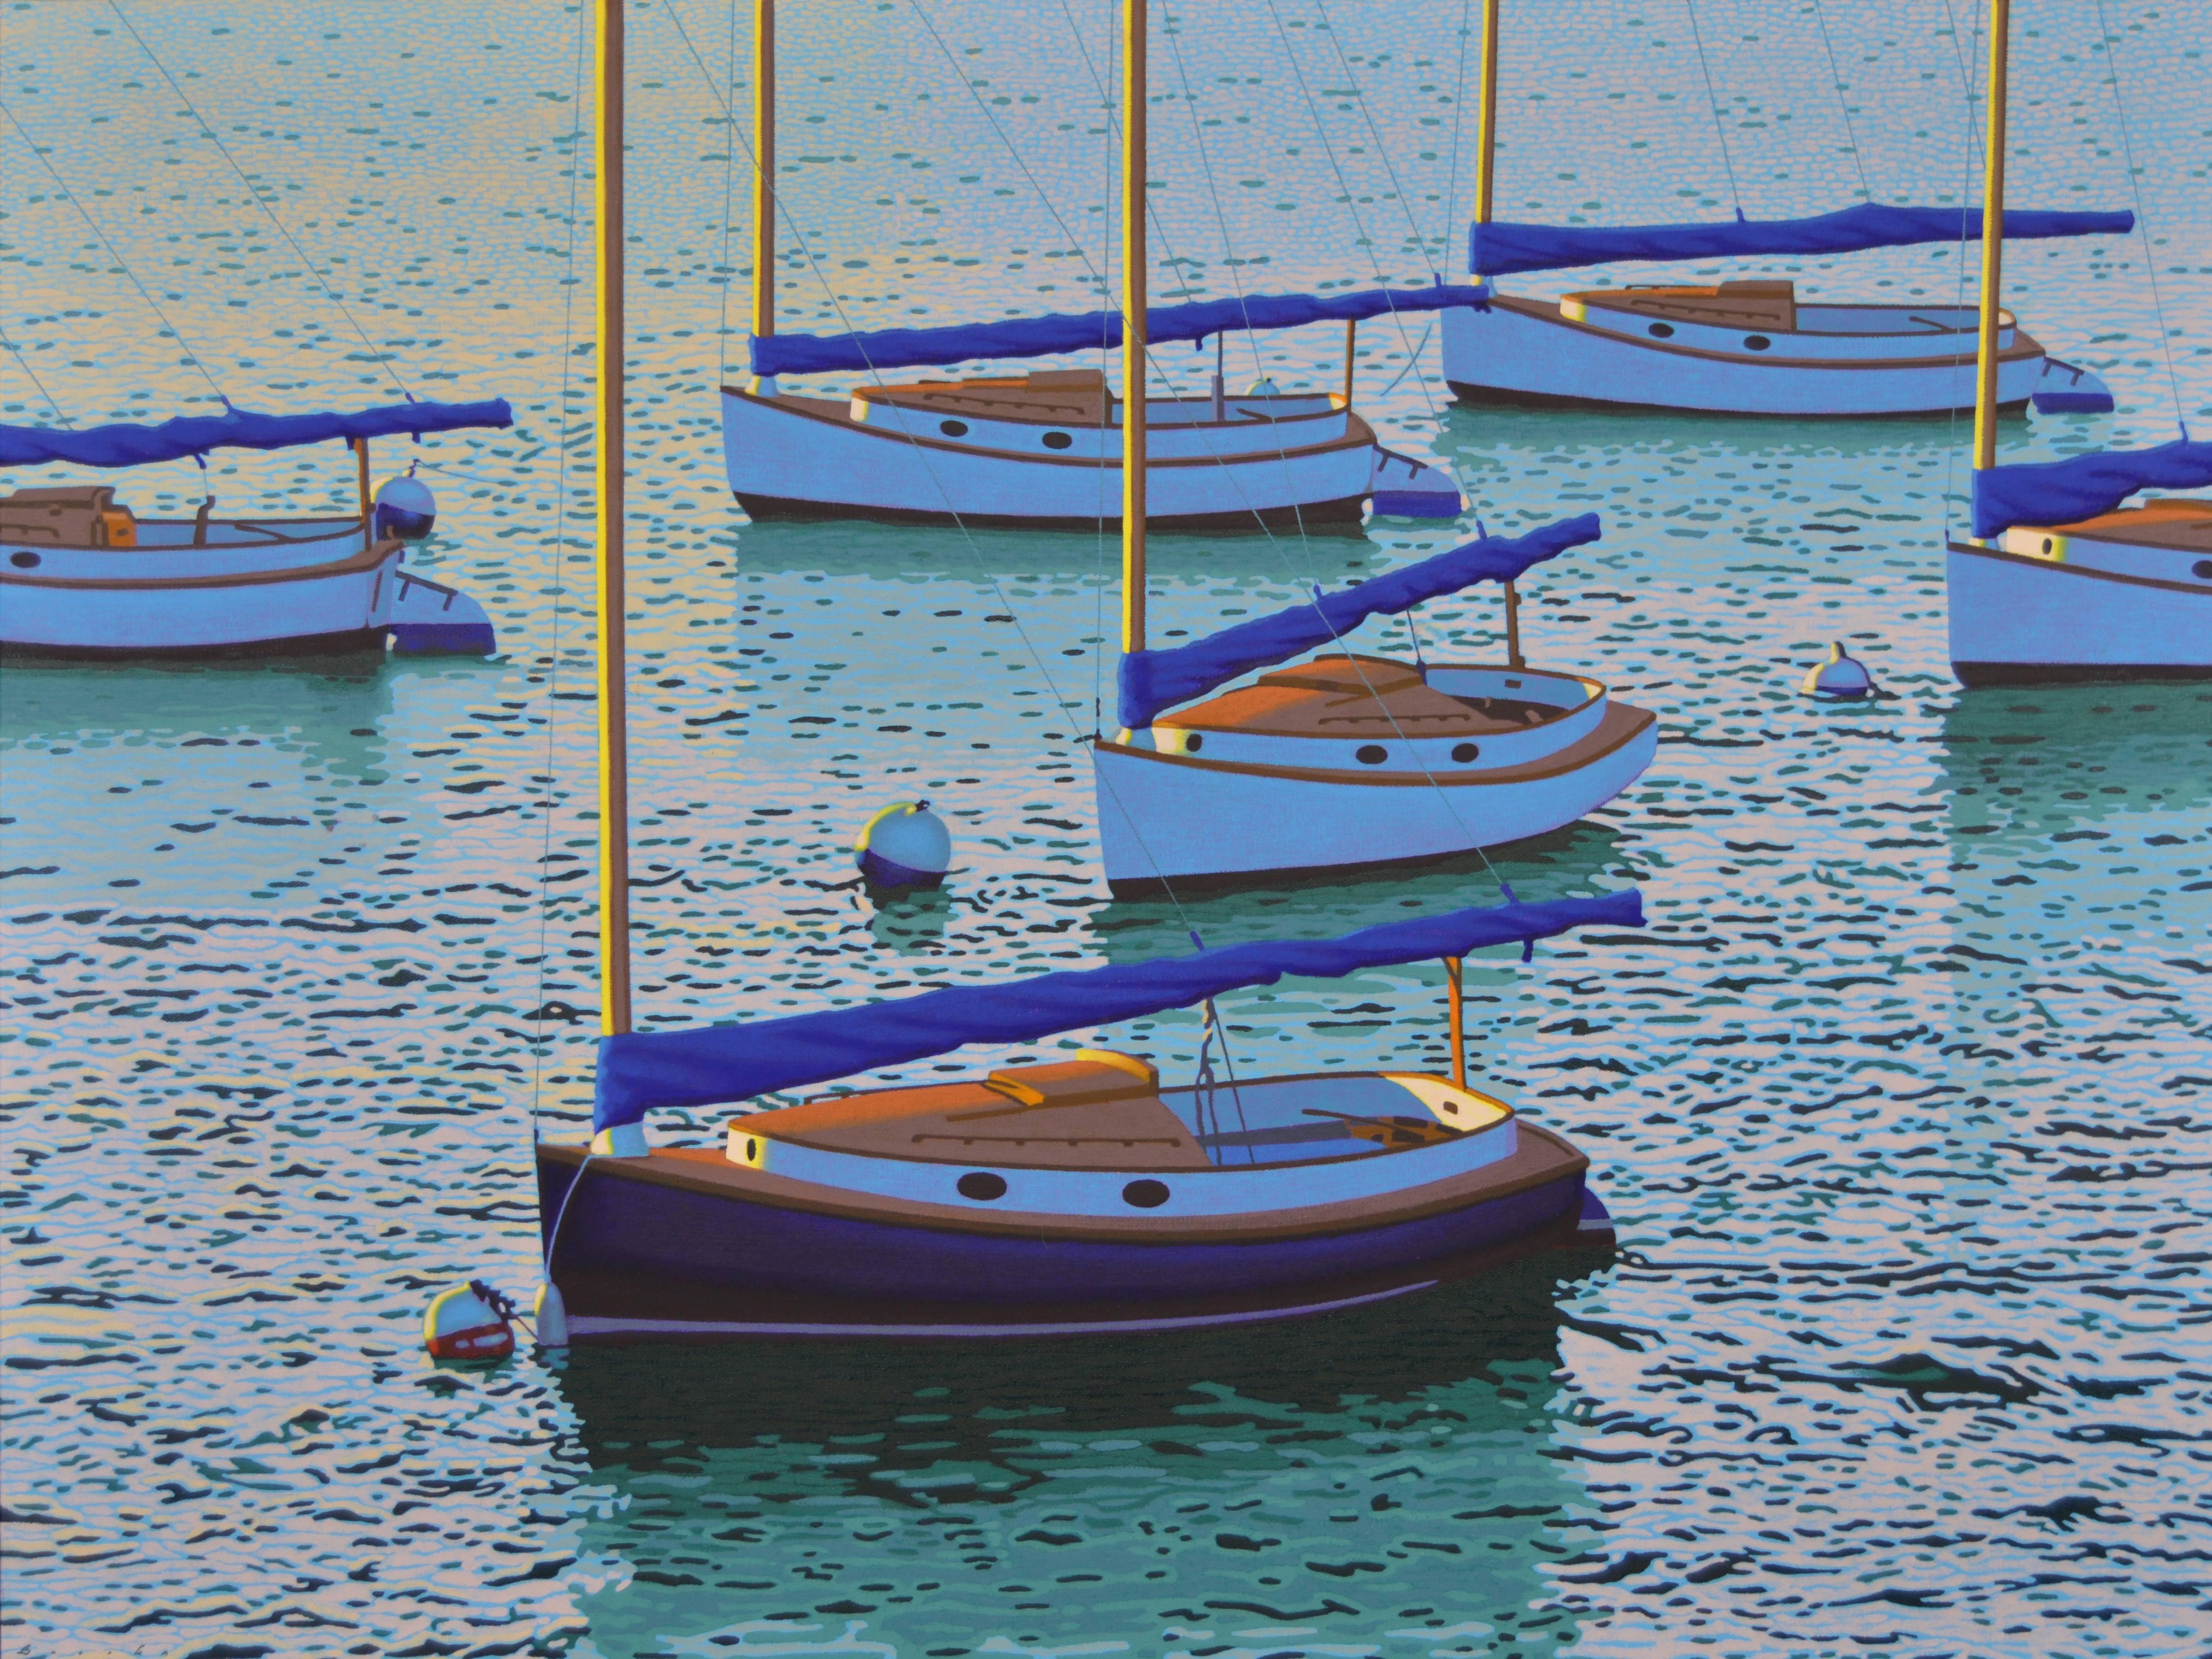 Rob Brooks Landscape Painting - "Cats" Sailboats in Blue Ocean, Calm Quiet Seascape